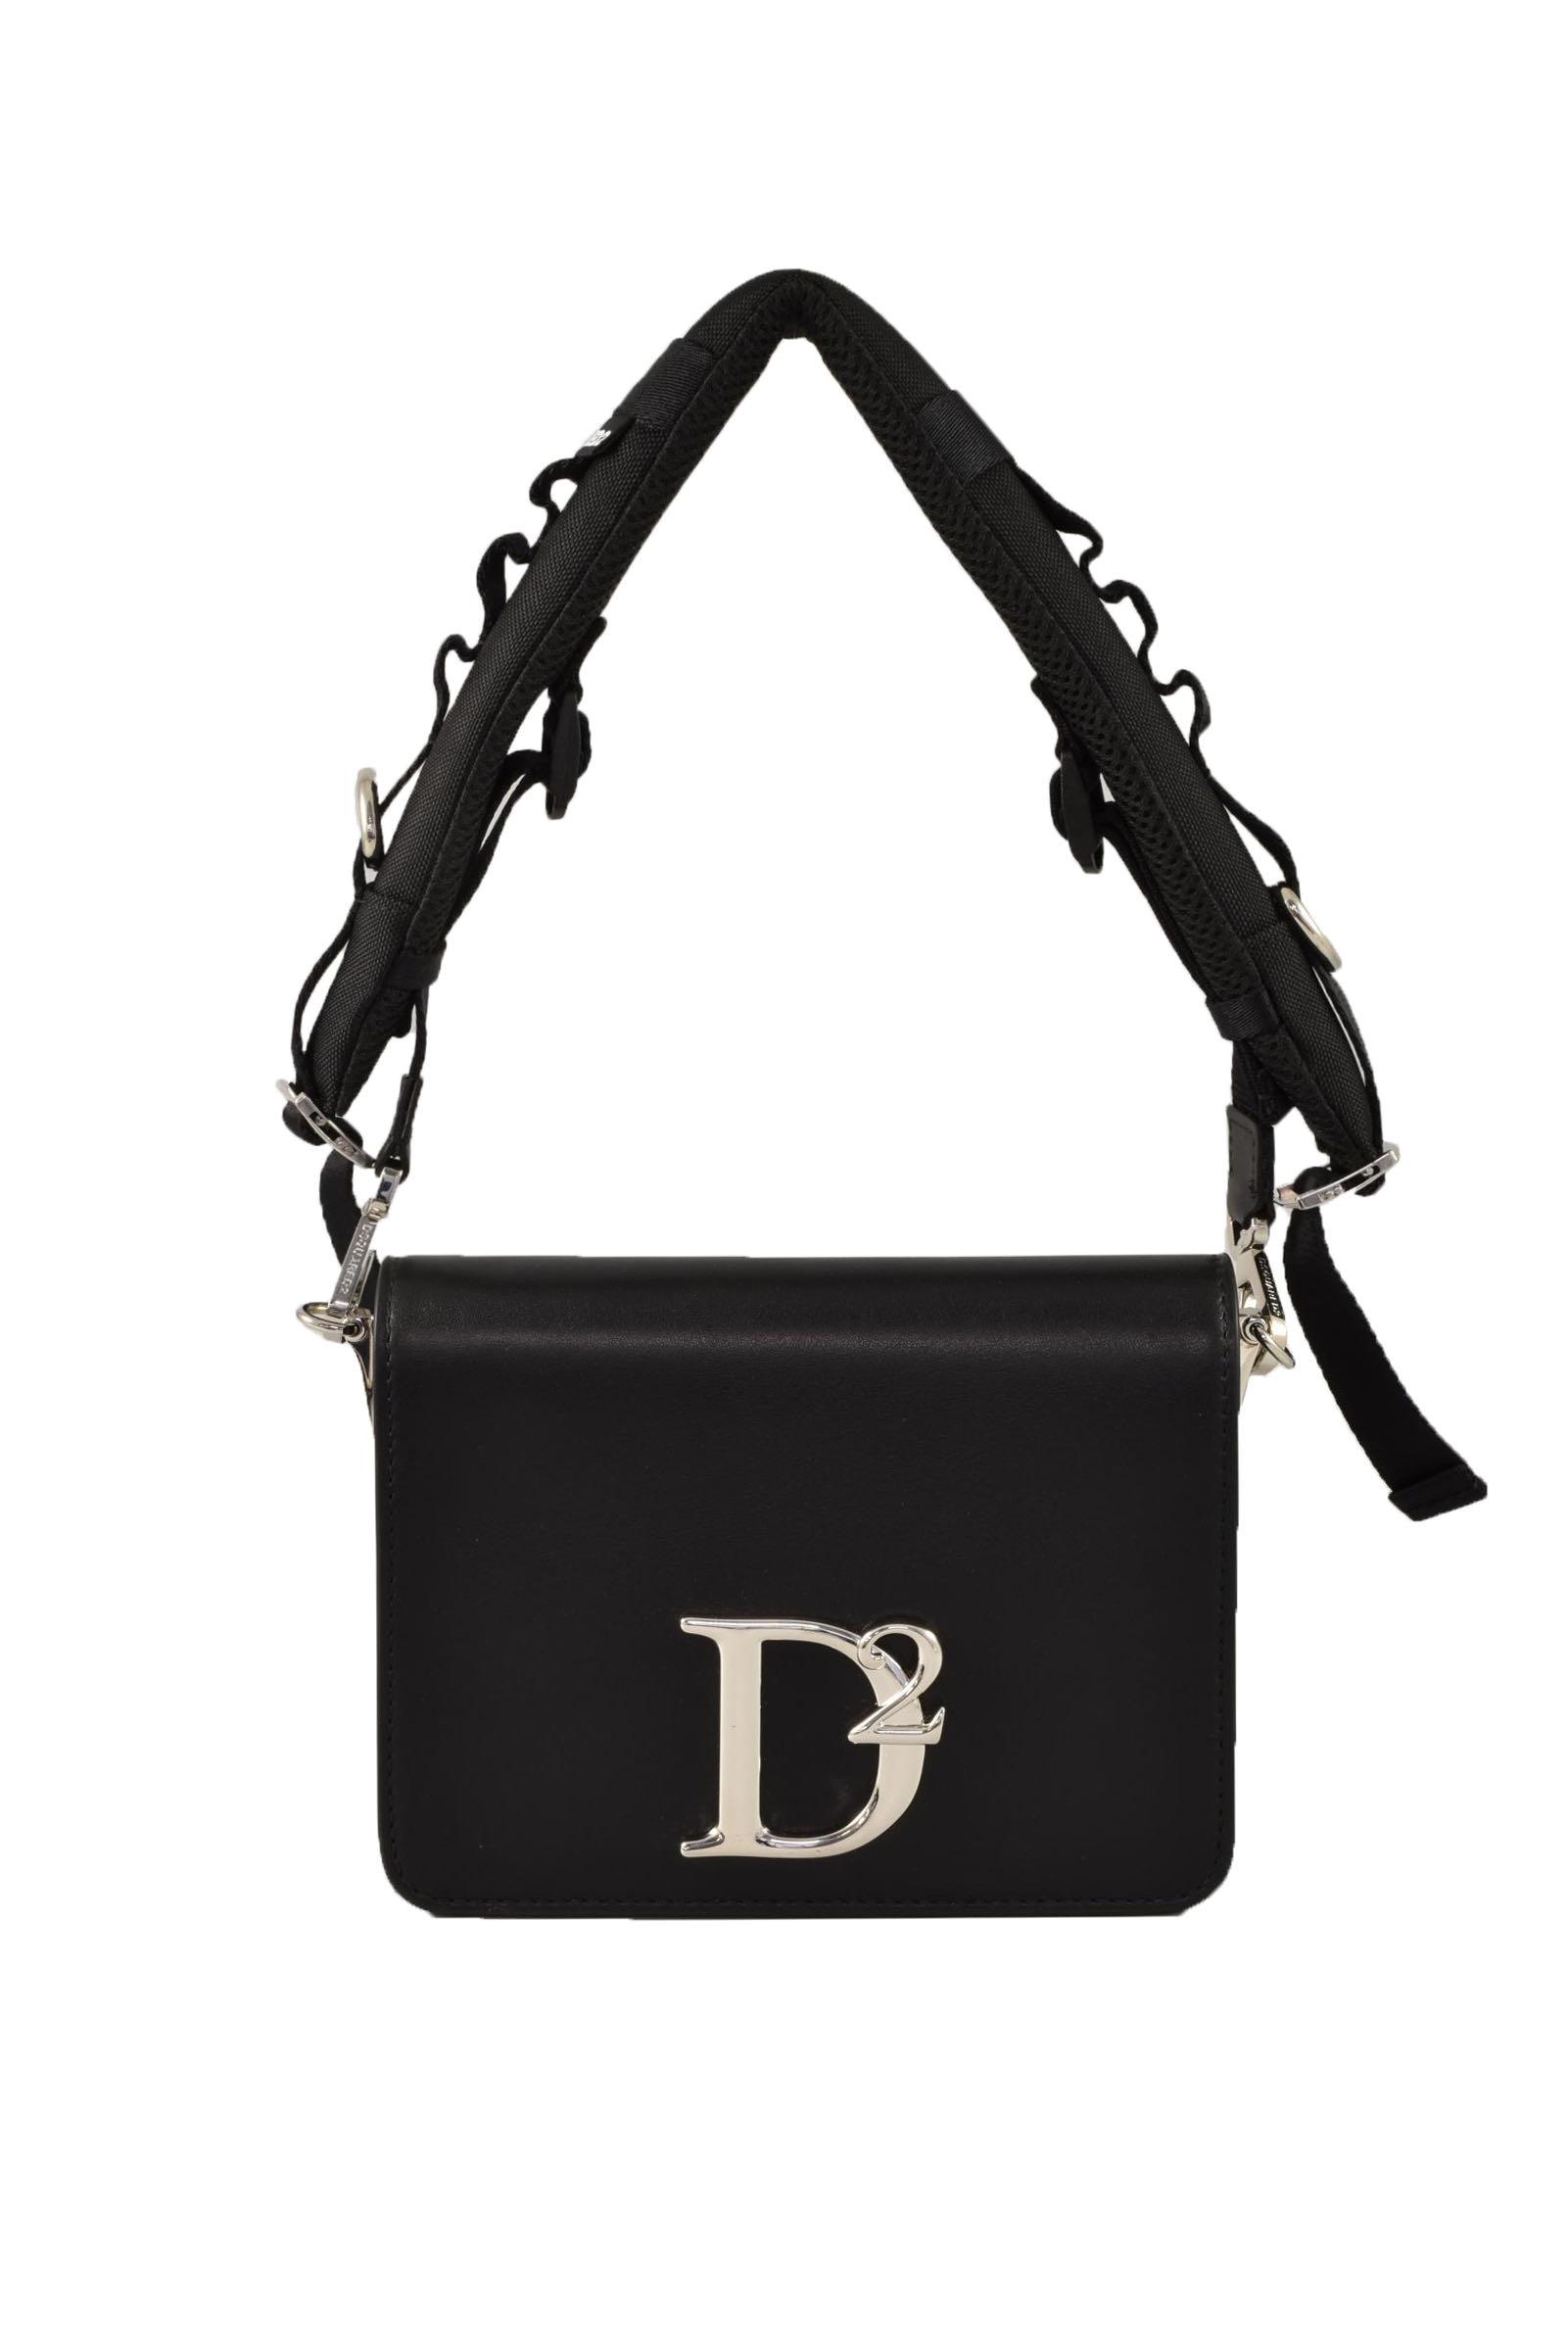 DSquared2 Women's Black Handbag